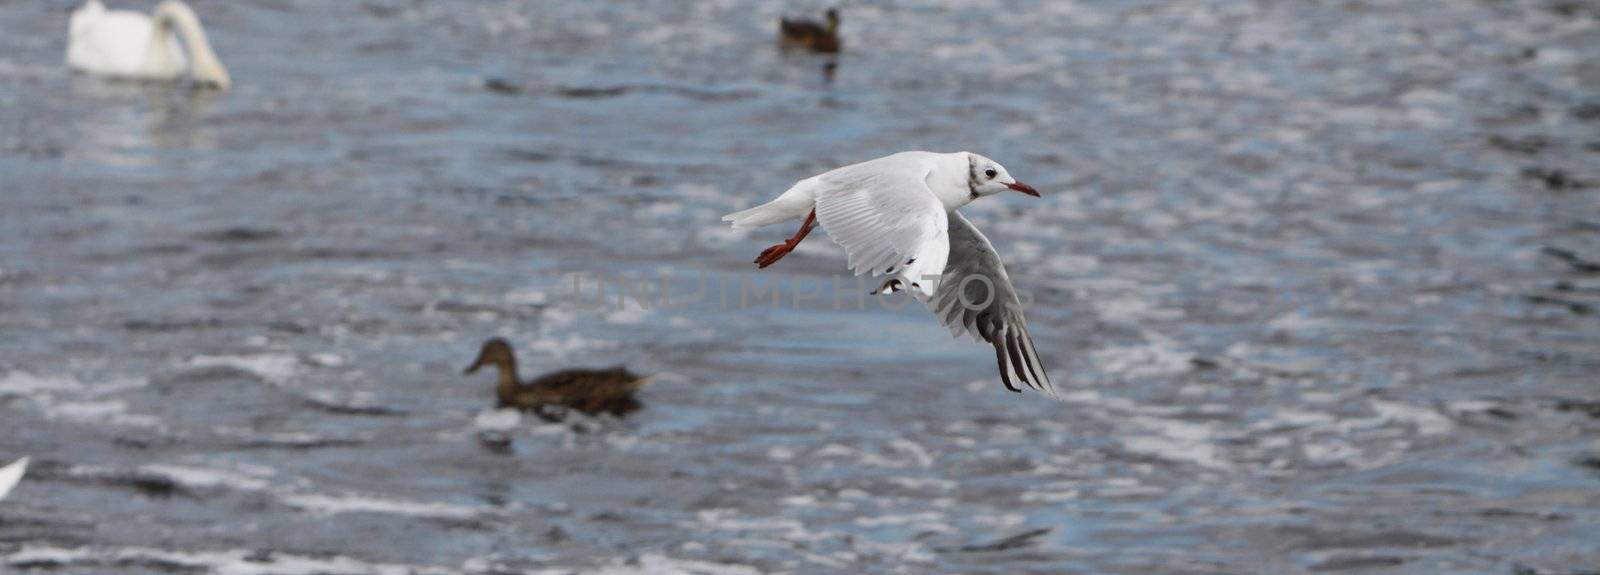 herring gull in flight by mitzy